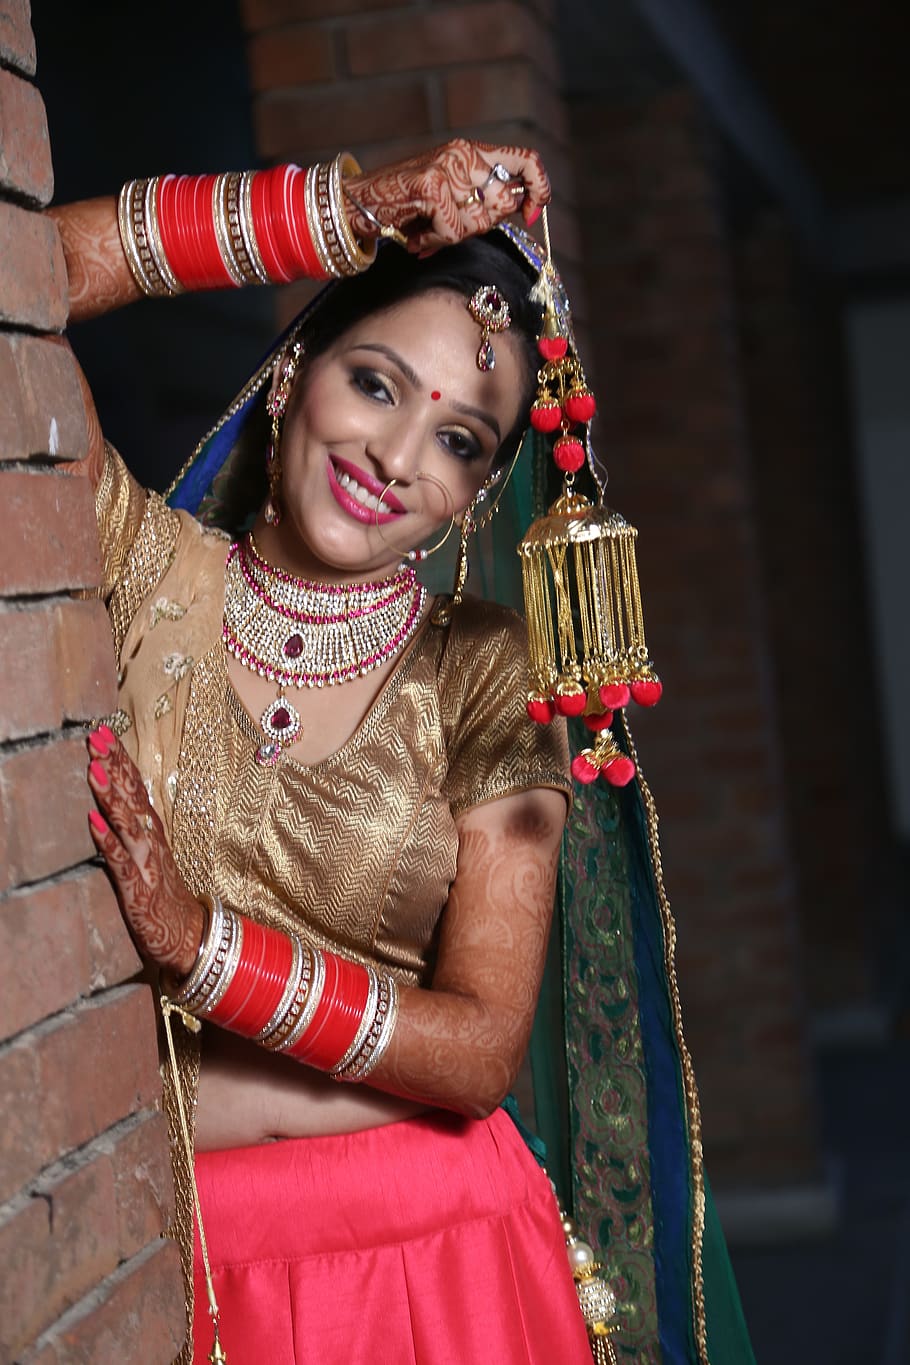 Sabyasachi | Indian wedding poses, Indian wedding photography, Indian bride  photography poses